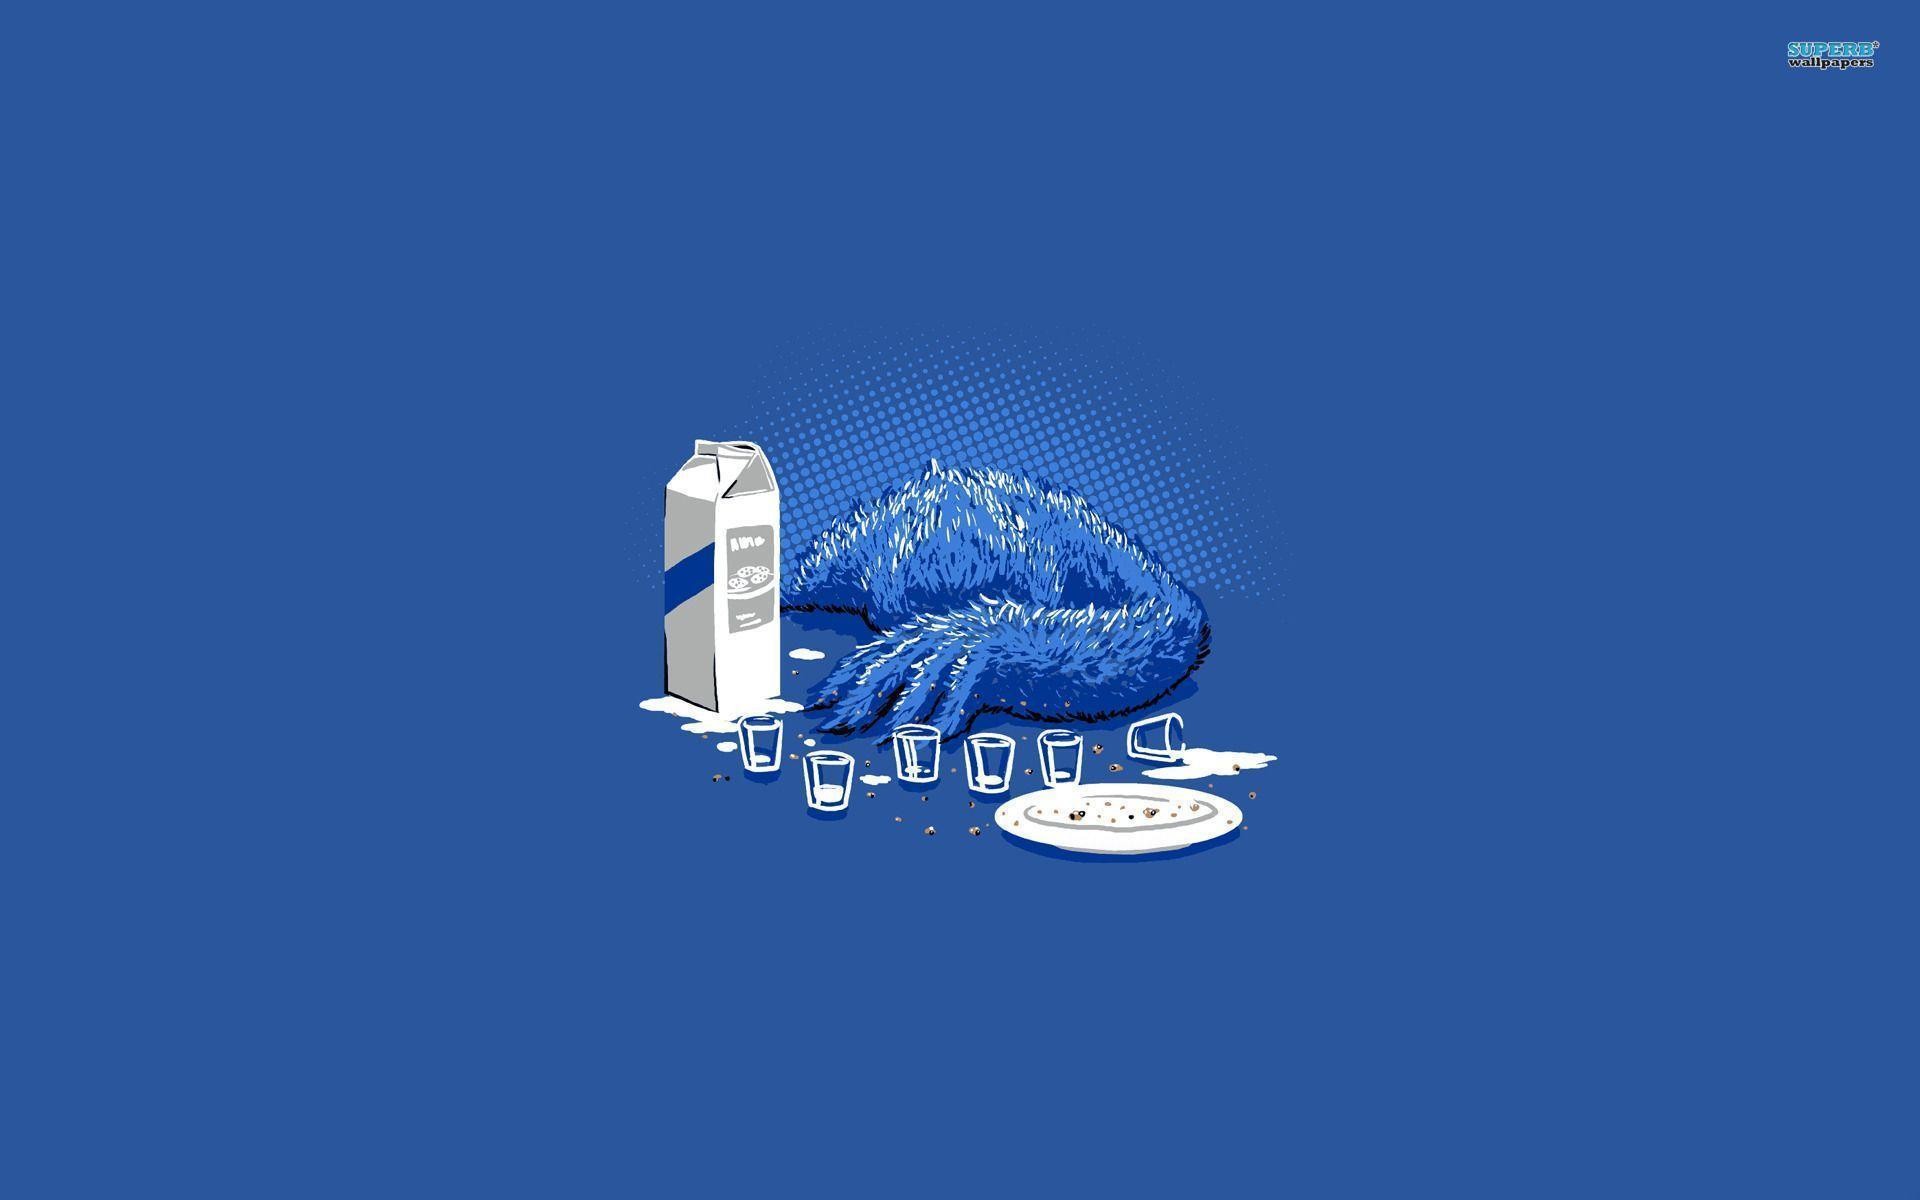 cookie monster wallpaper,product,blue,font,logo,illustration